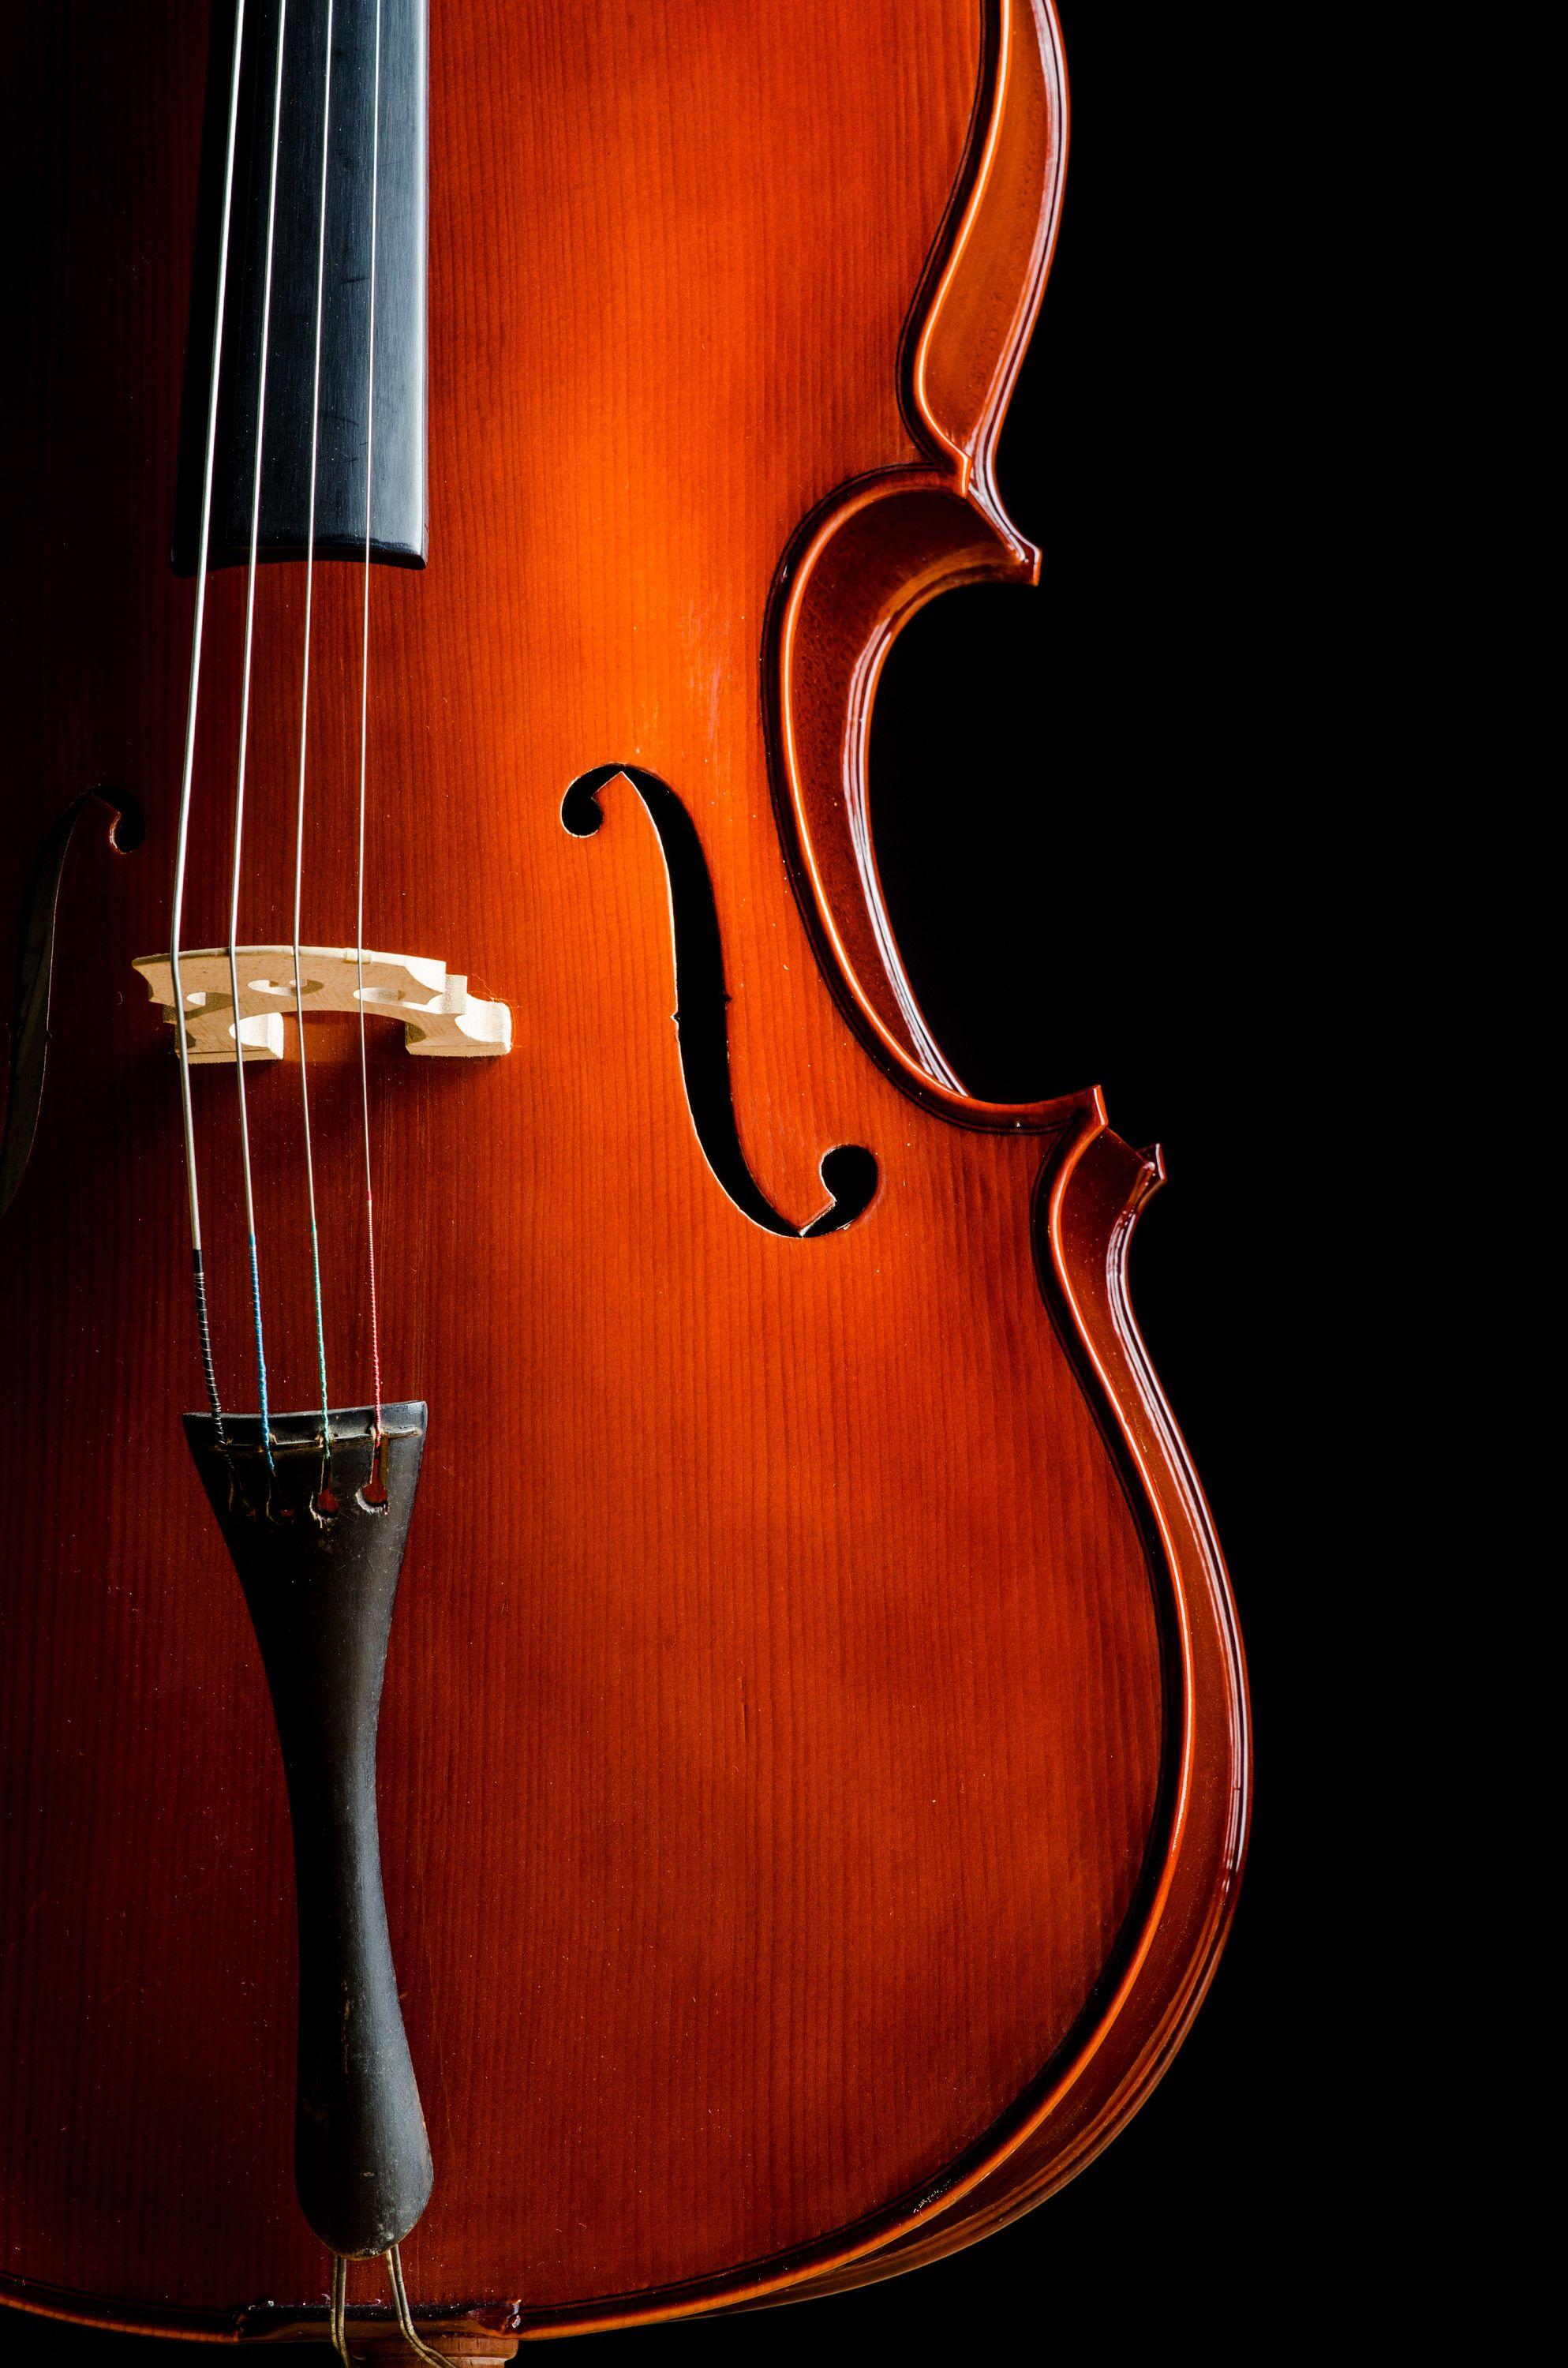 picture of a cello